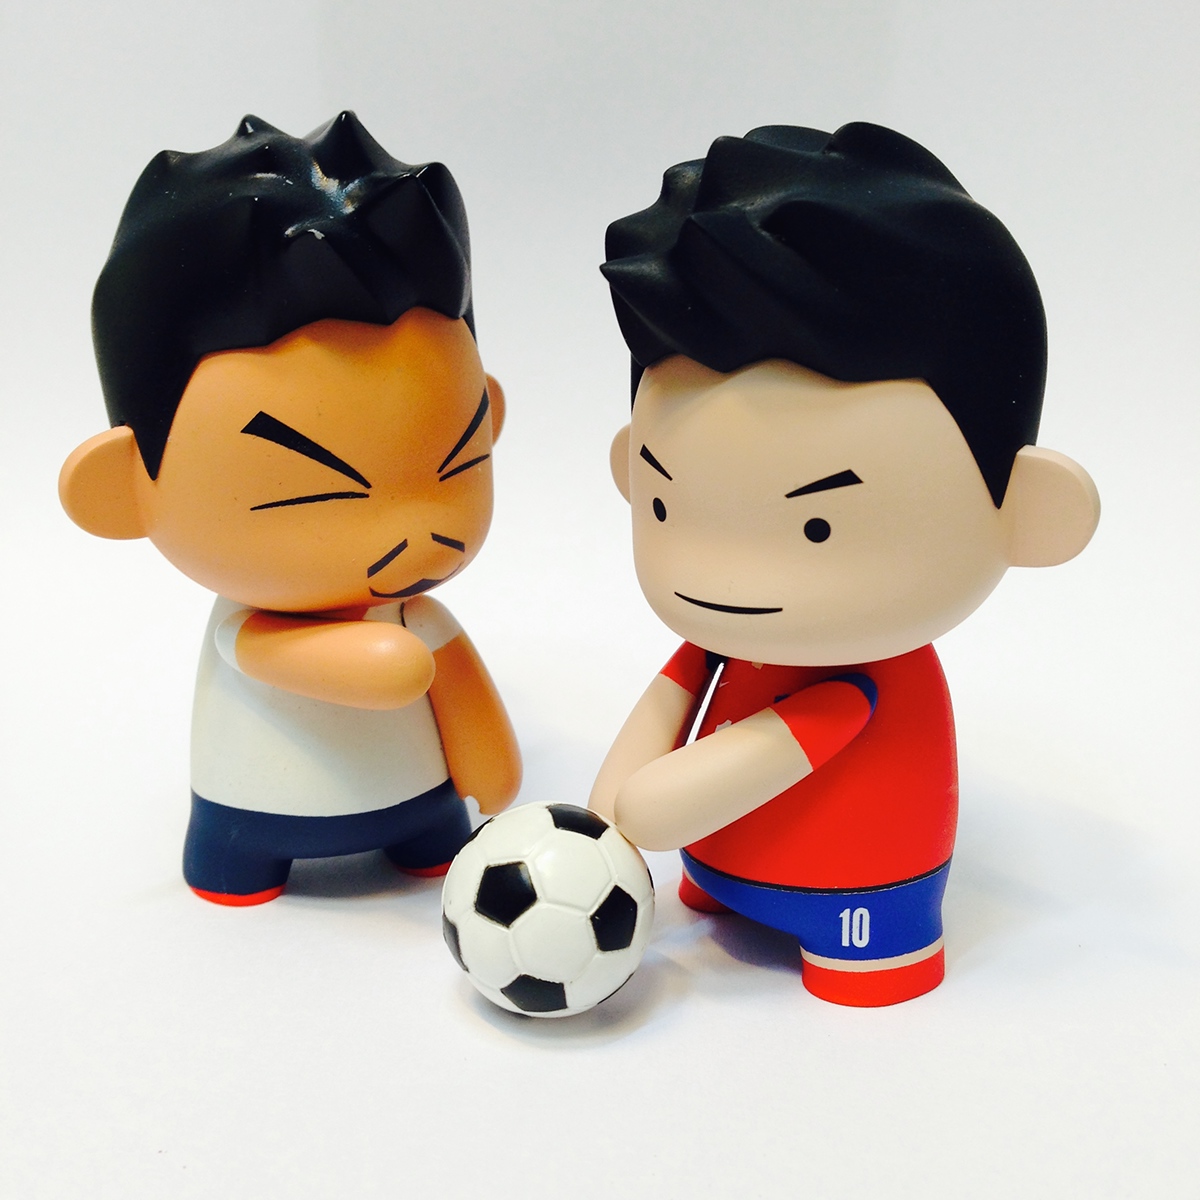 VUZZY baekho StudioViper Sopp soccer world cup toy art toy